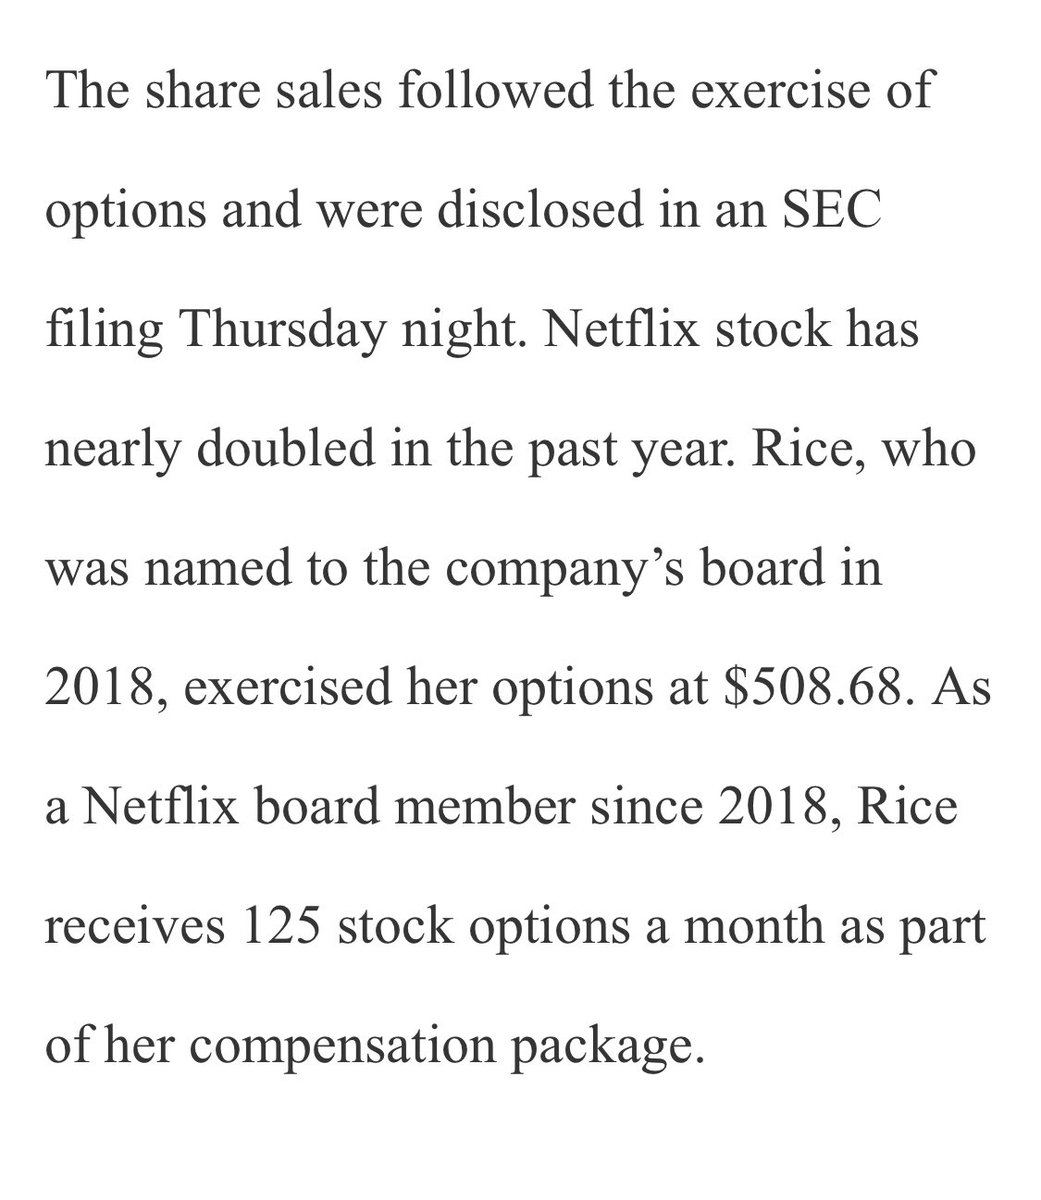   https://fortune.com/2020/08/07/susan-rice-sells-netflix-shares-biden-vp-pick/